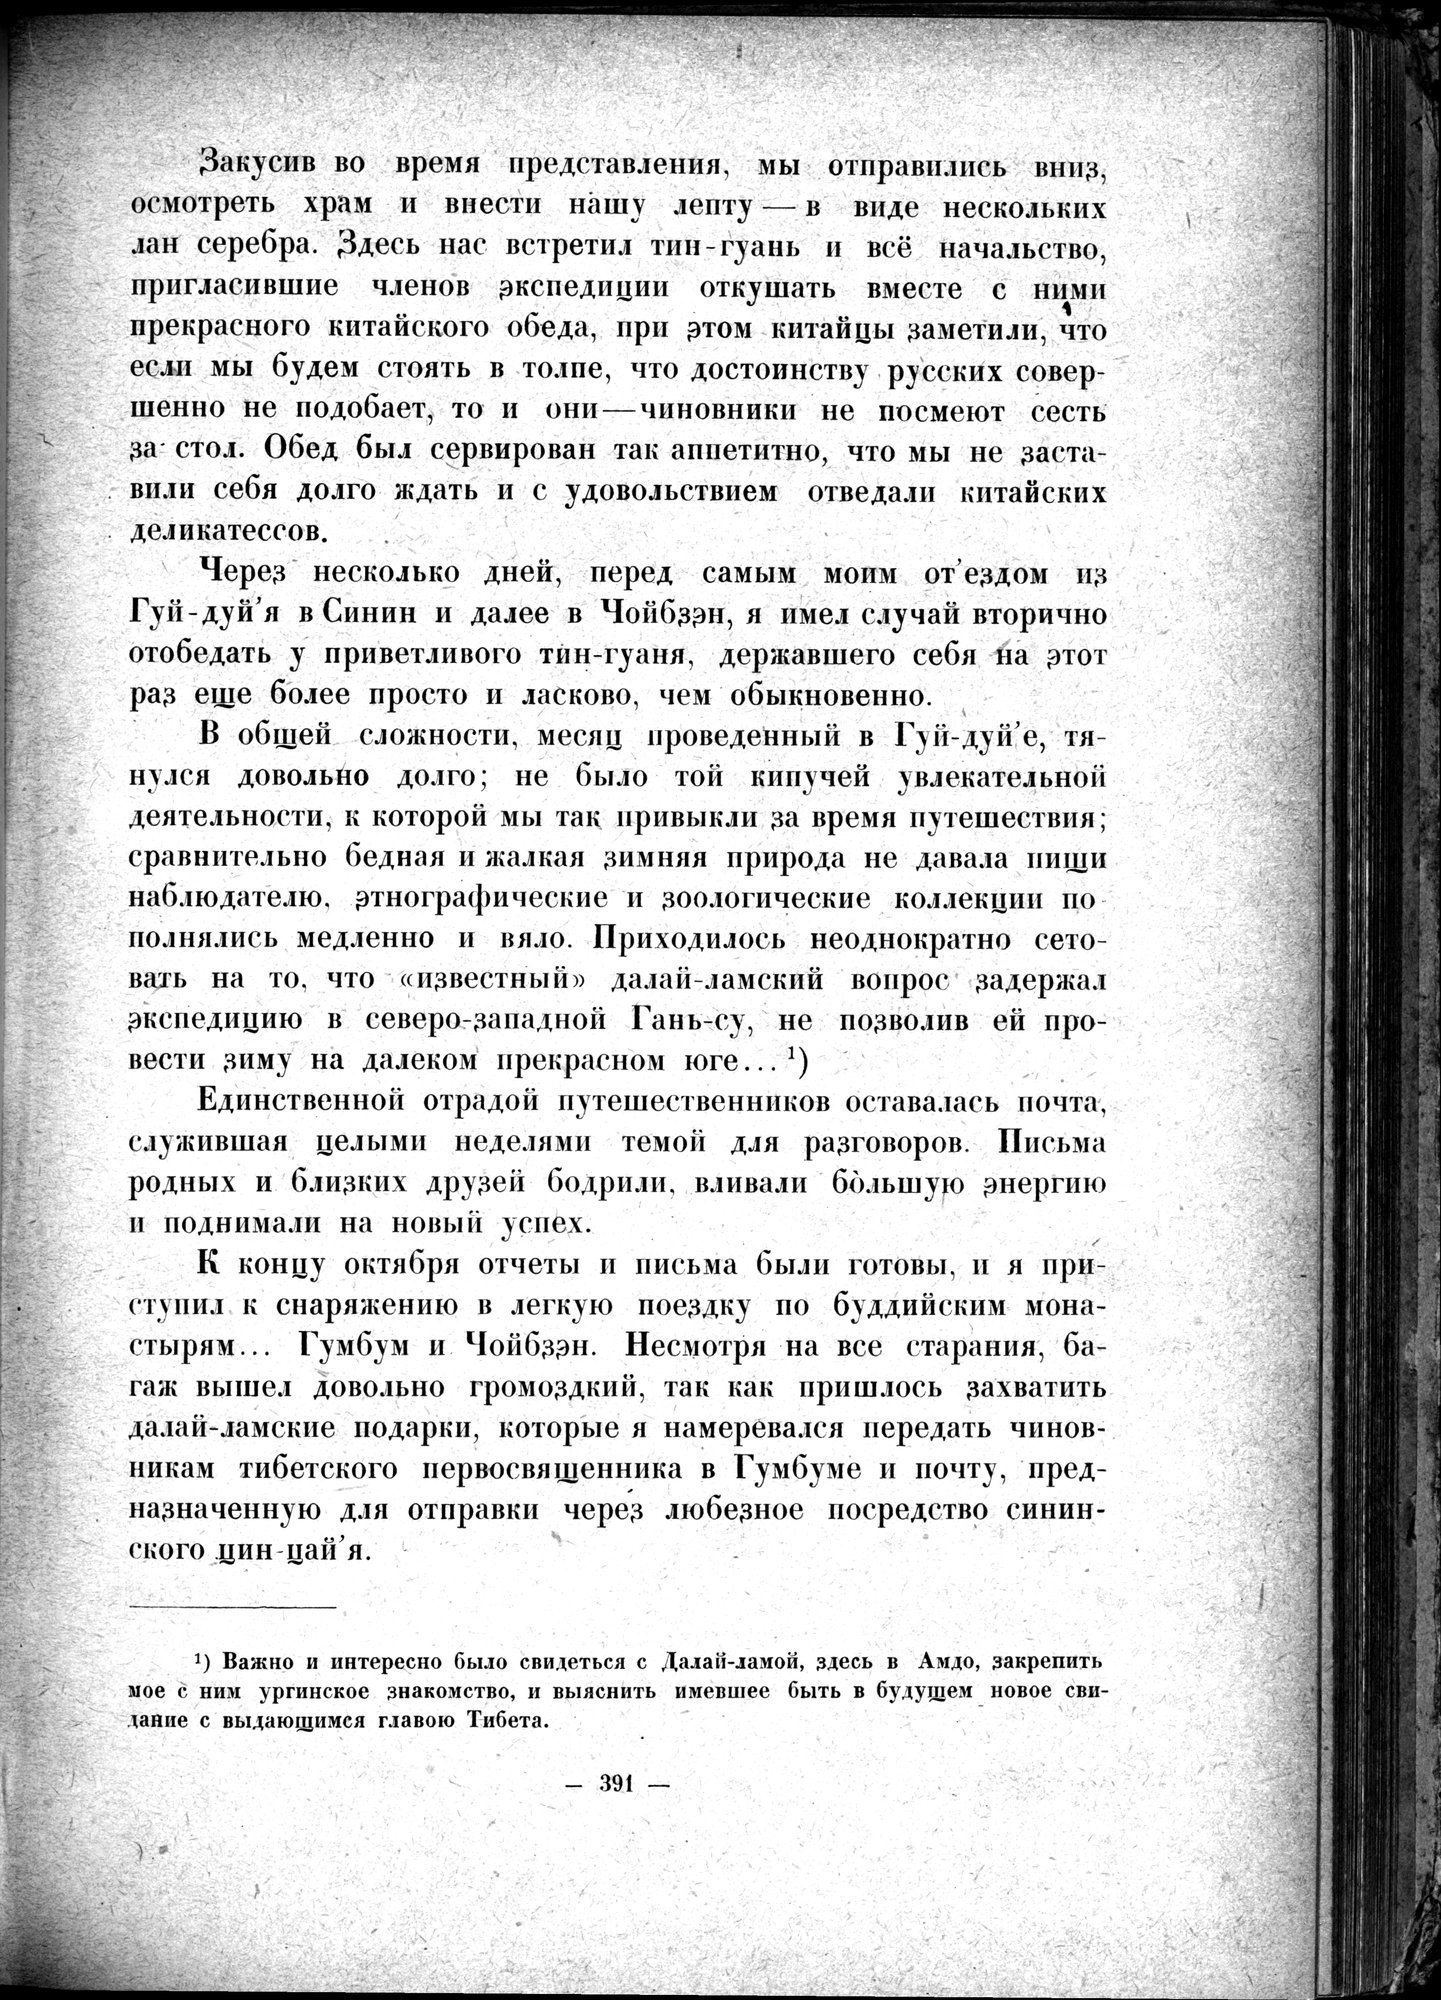 Mongoliya i Amdo i mertby gorod Khara-Khoto : vol.1 / Page 445 (Grayscale High Resolution Image)